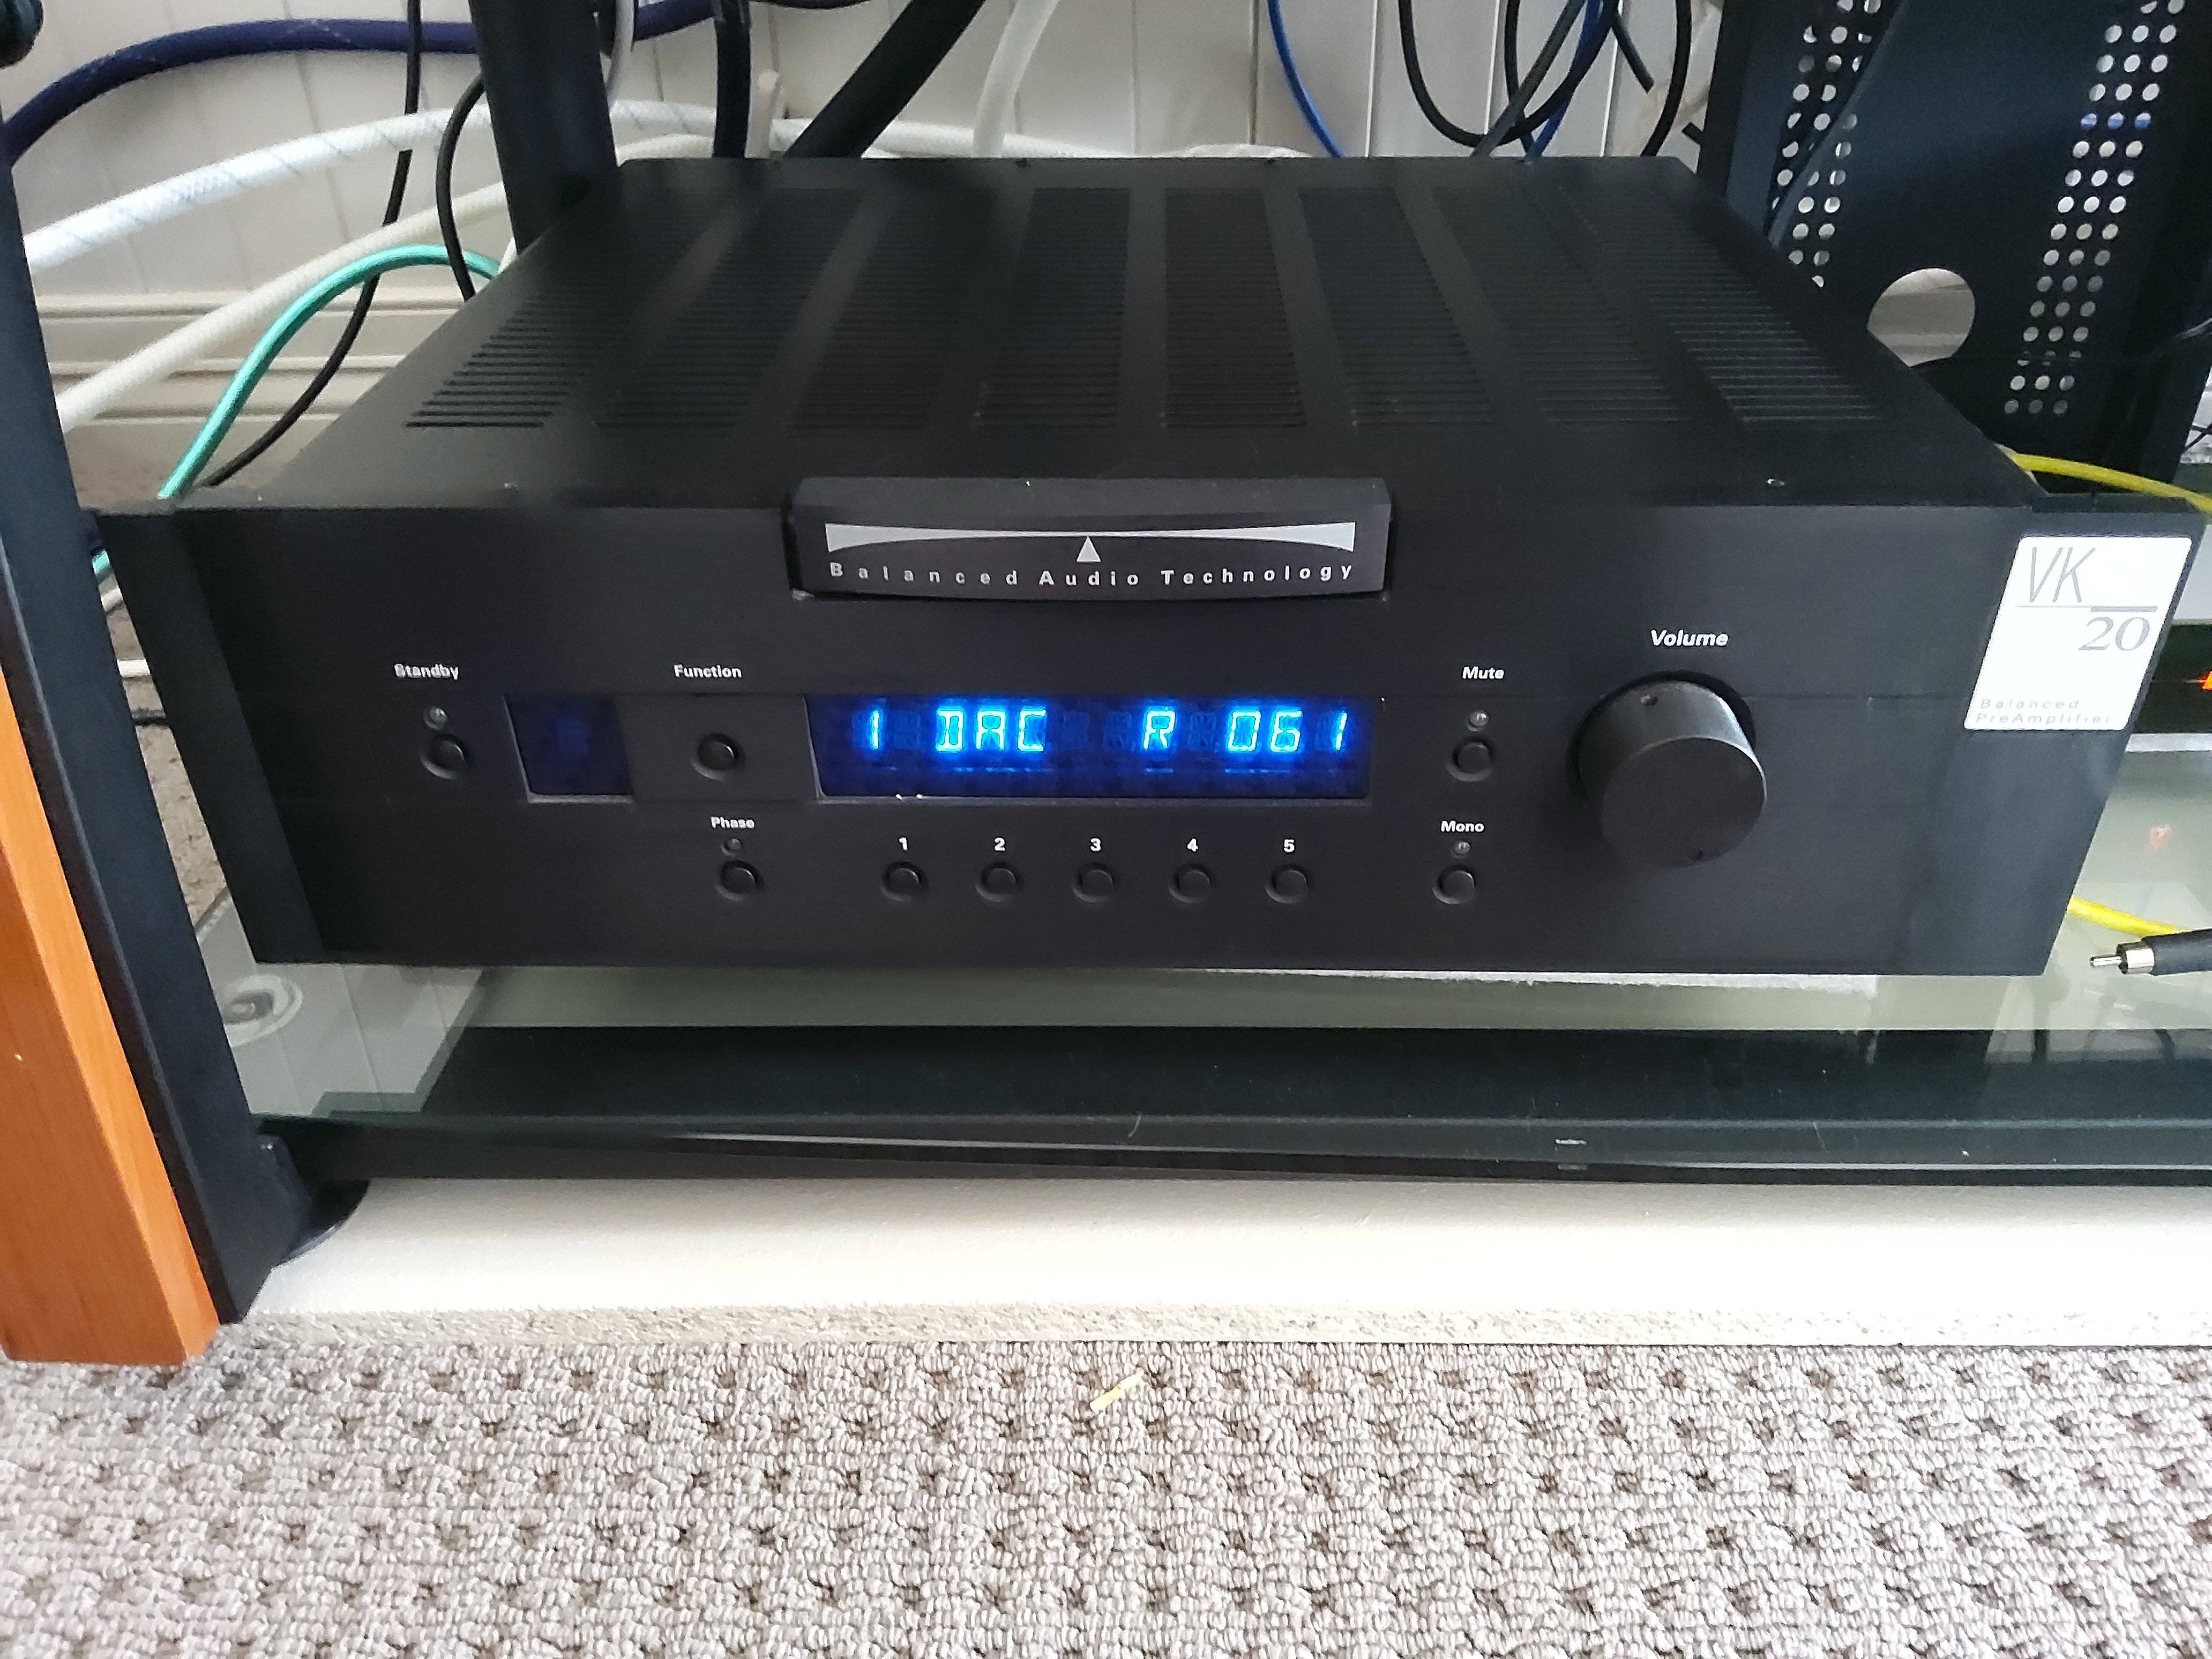 Balanced Audio Technology VK-20